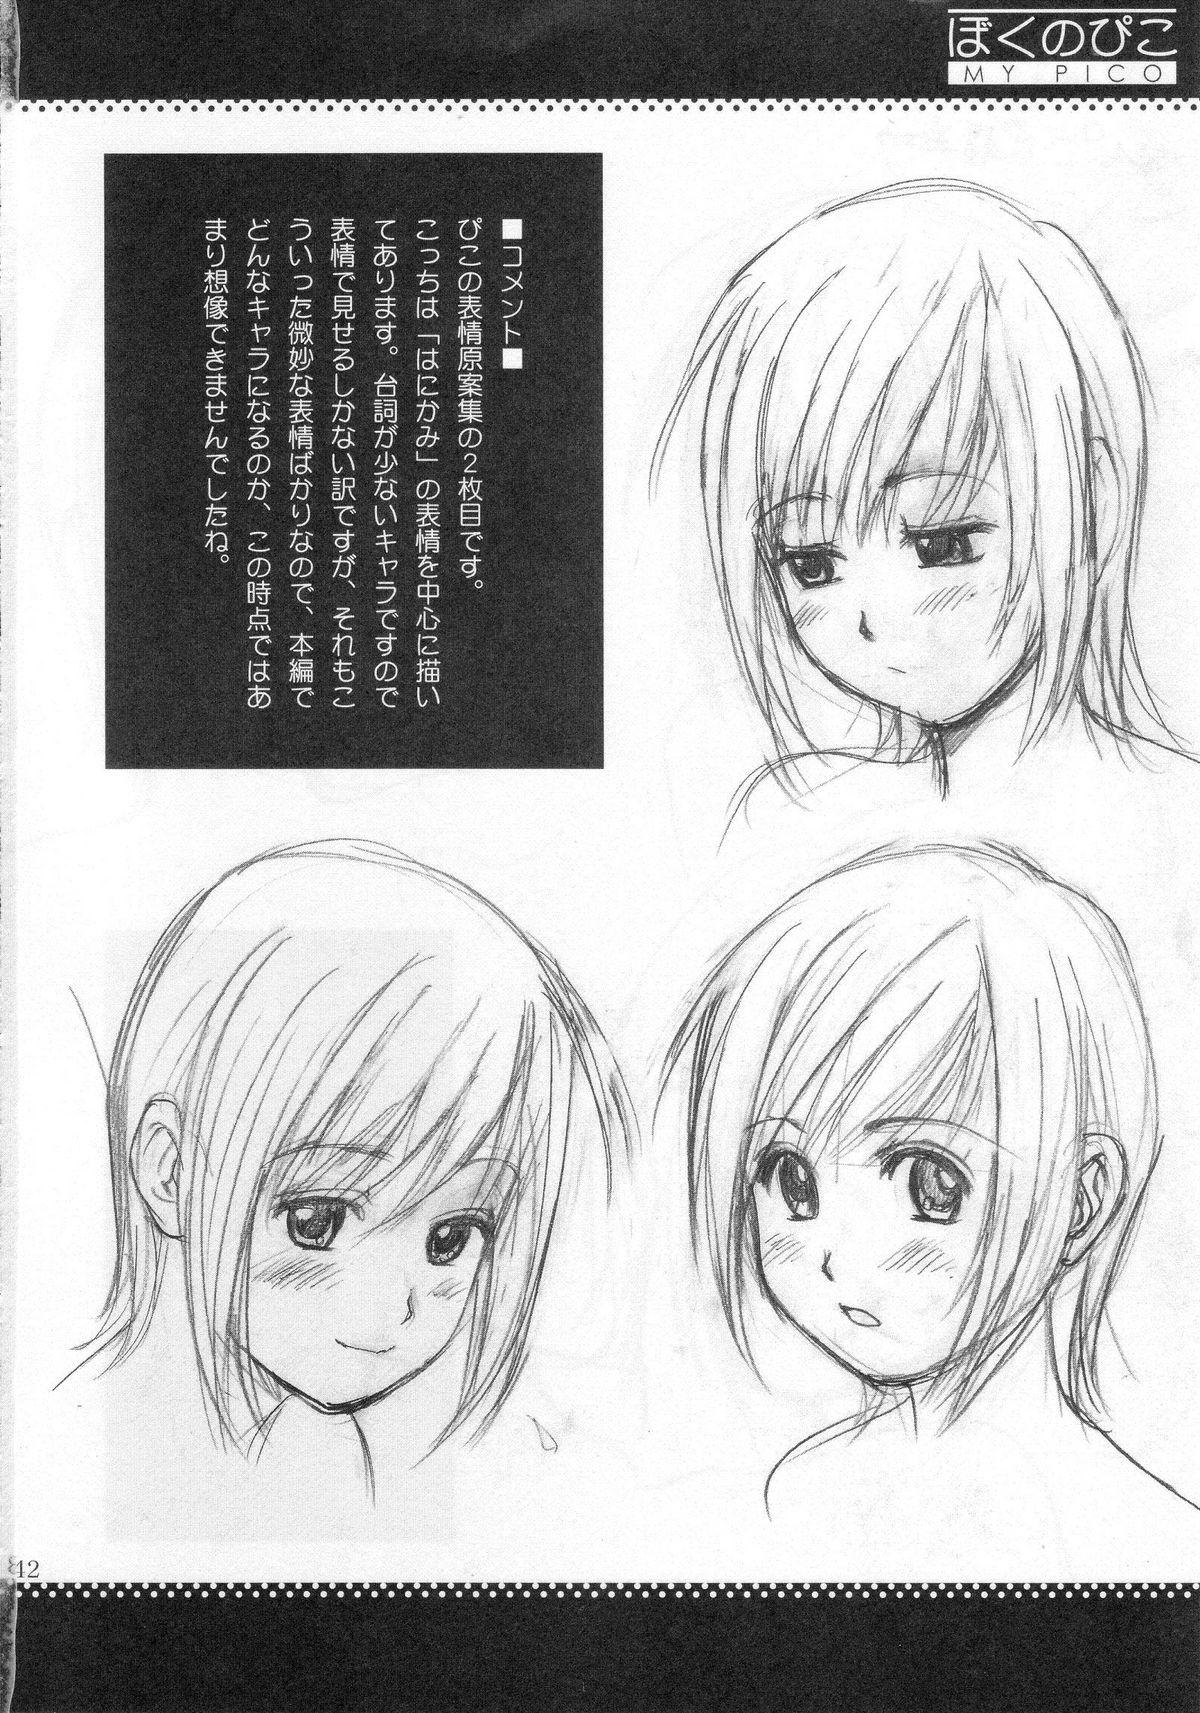 Boku no Pico Comic + Koushiki Character Genanshuu 40